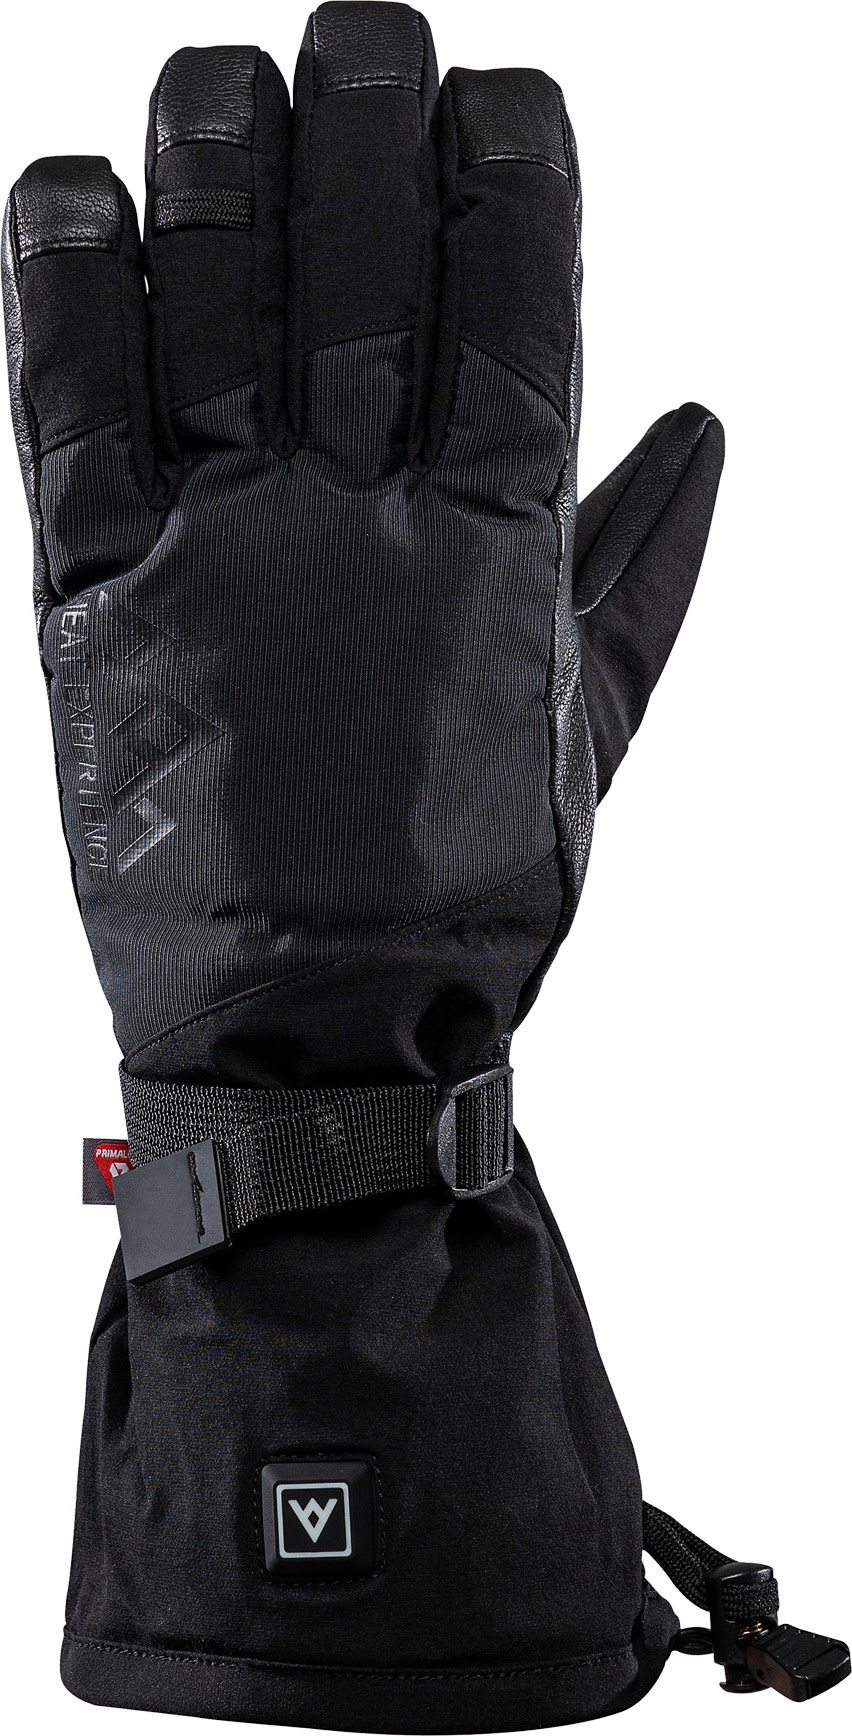 Heat Experience All-Mountain Heated Gloves Black